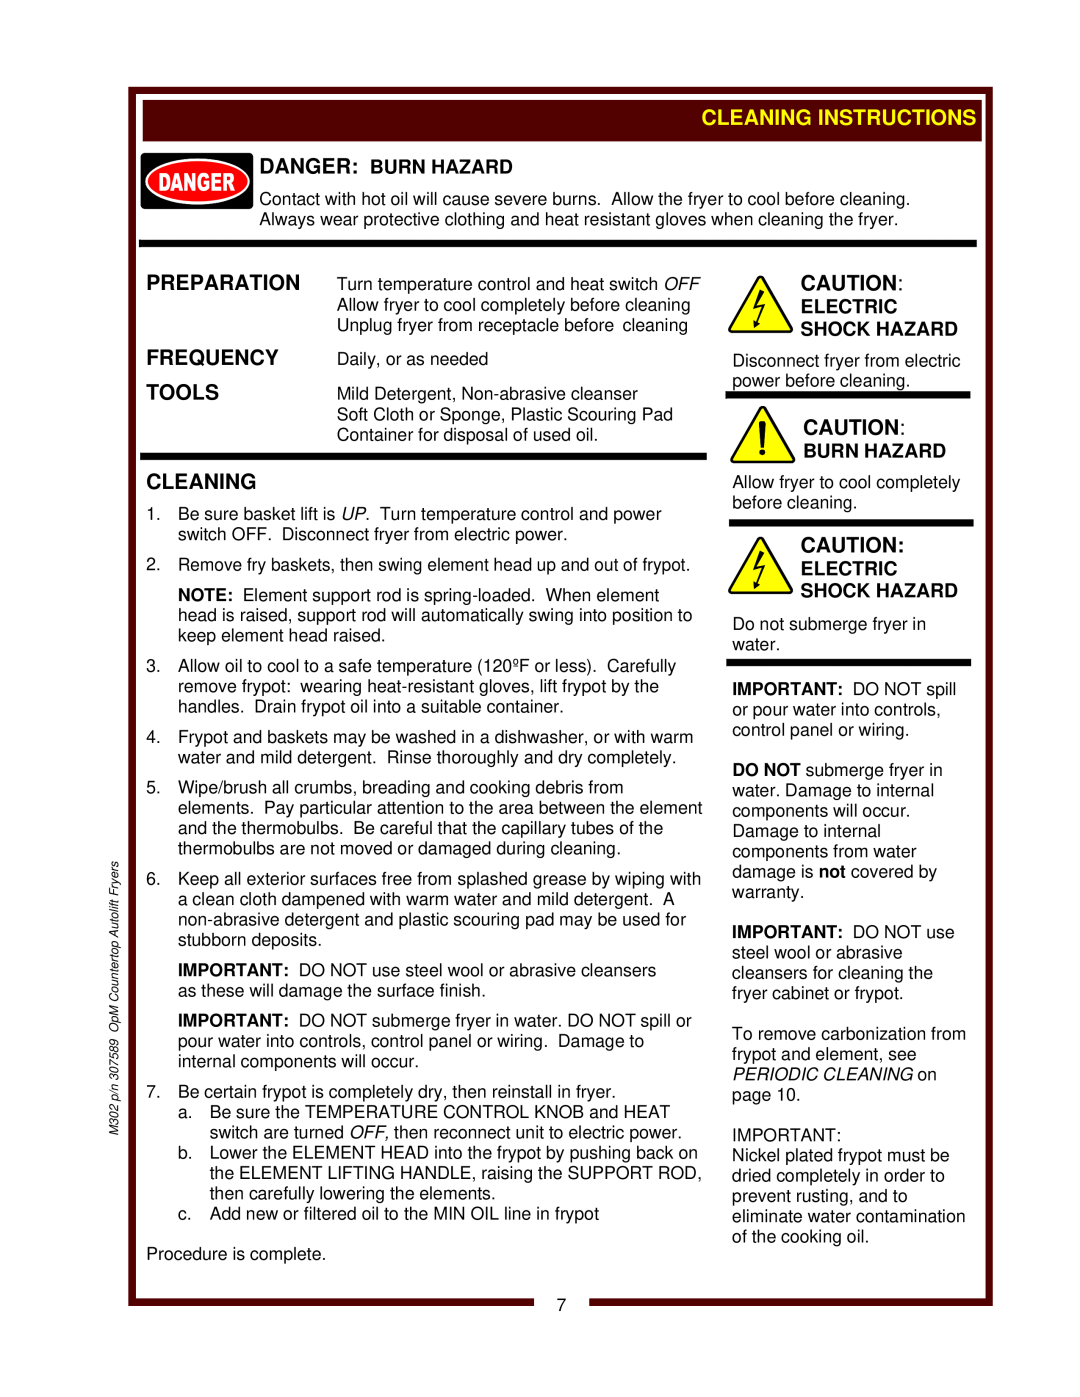 Wells F-88 Cleaning Instructions, Preparation, Frequency, Tools, Electric Shock Hazard, Danger Burn Hazard 